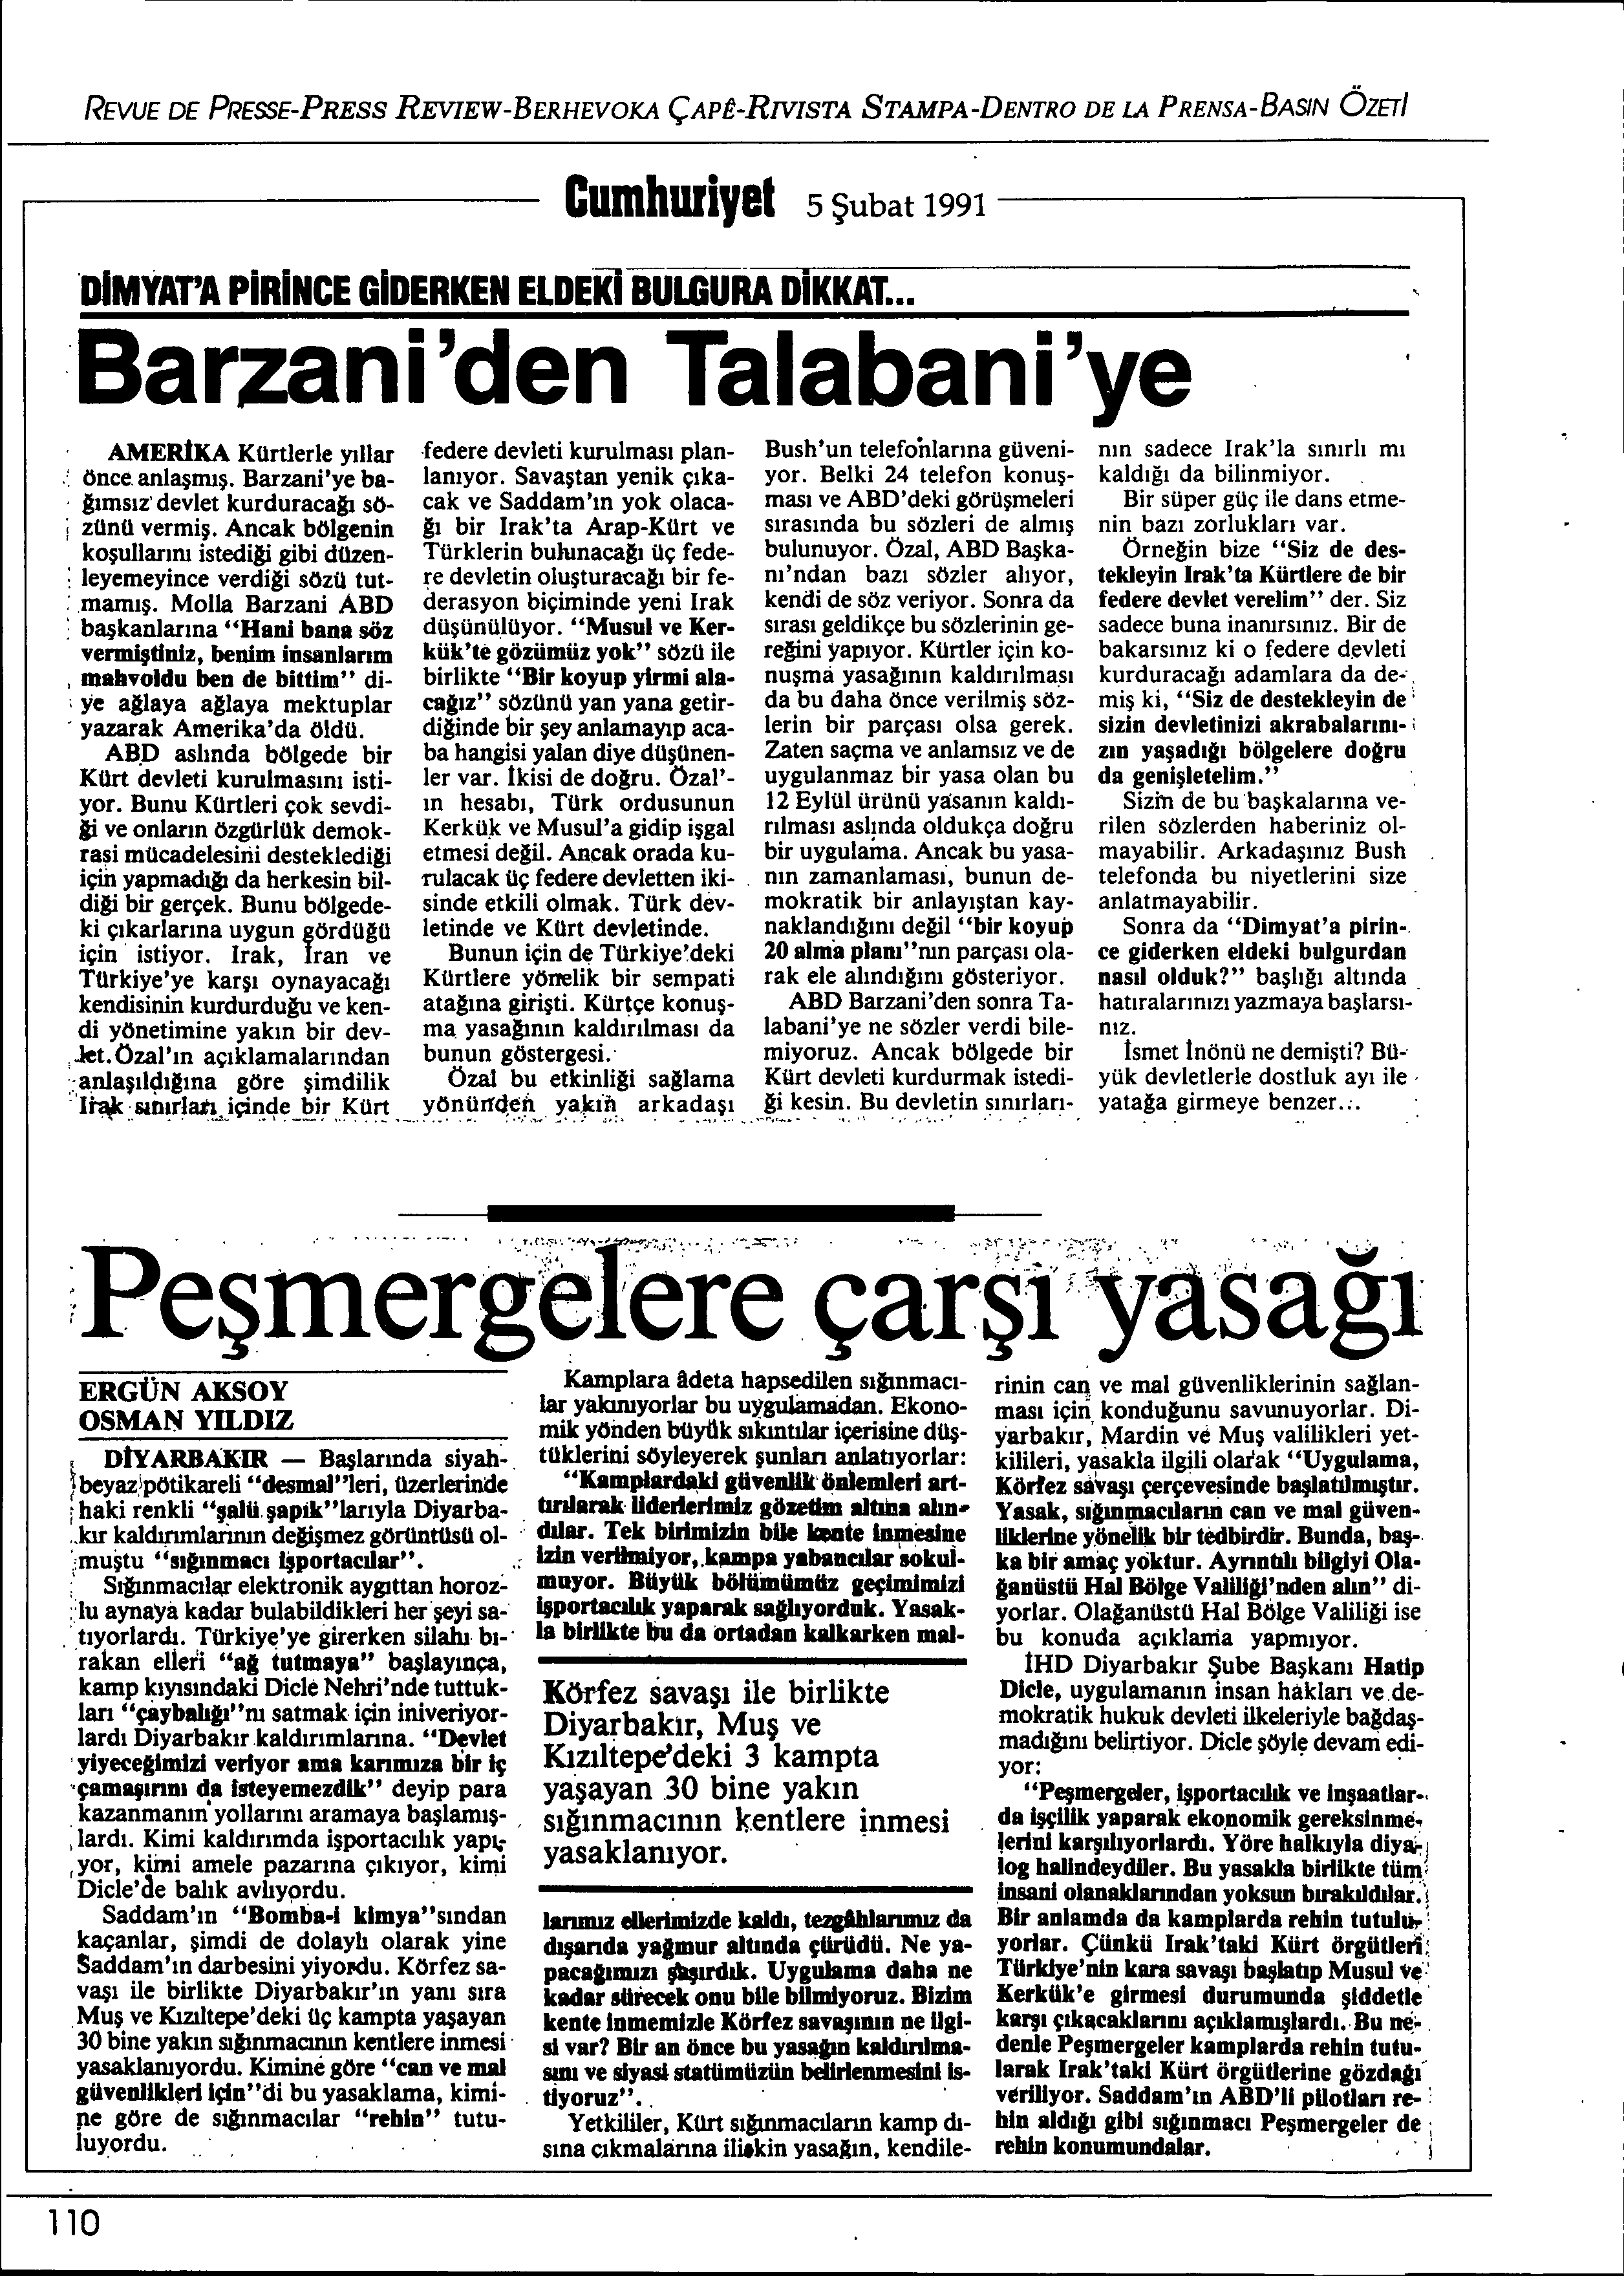 REVUE DE PRESSE-PRESS REVIEW-BERHEVOKA ÇAPt-RNISTA STAMPA-DENTRO DE LA PRENSA-BASIN ÖZETI Cumhuriyet 5 $ubat 1991 ---------, 'DiMYArA plaince GIDEAKENELDEiliiJUiifRAiiiKKAT Barzani'den Talabani'ye